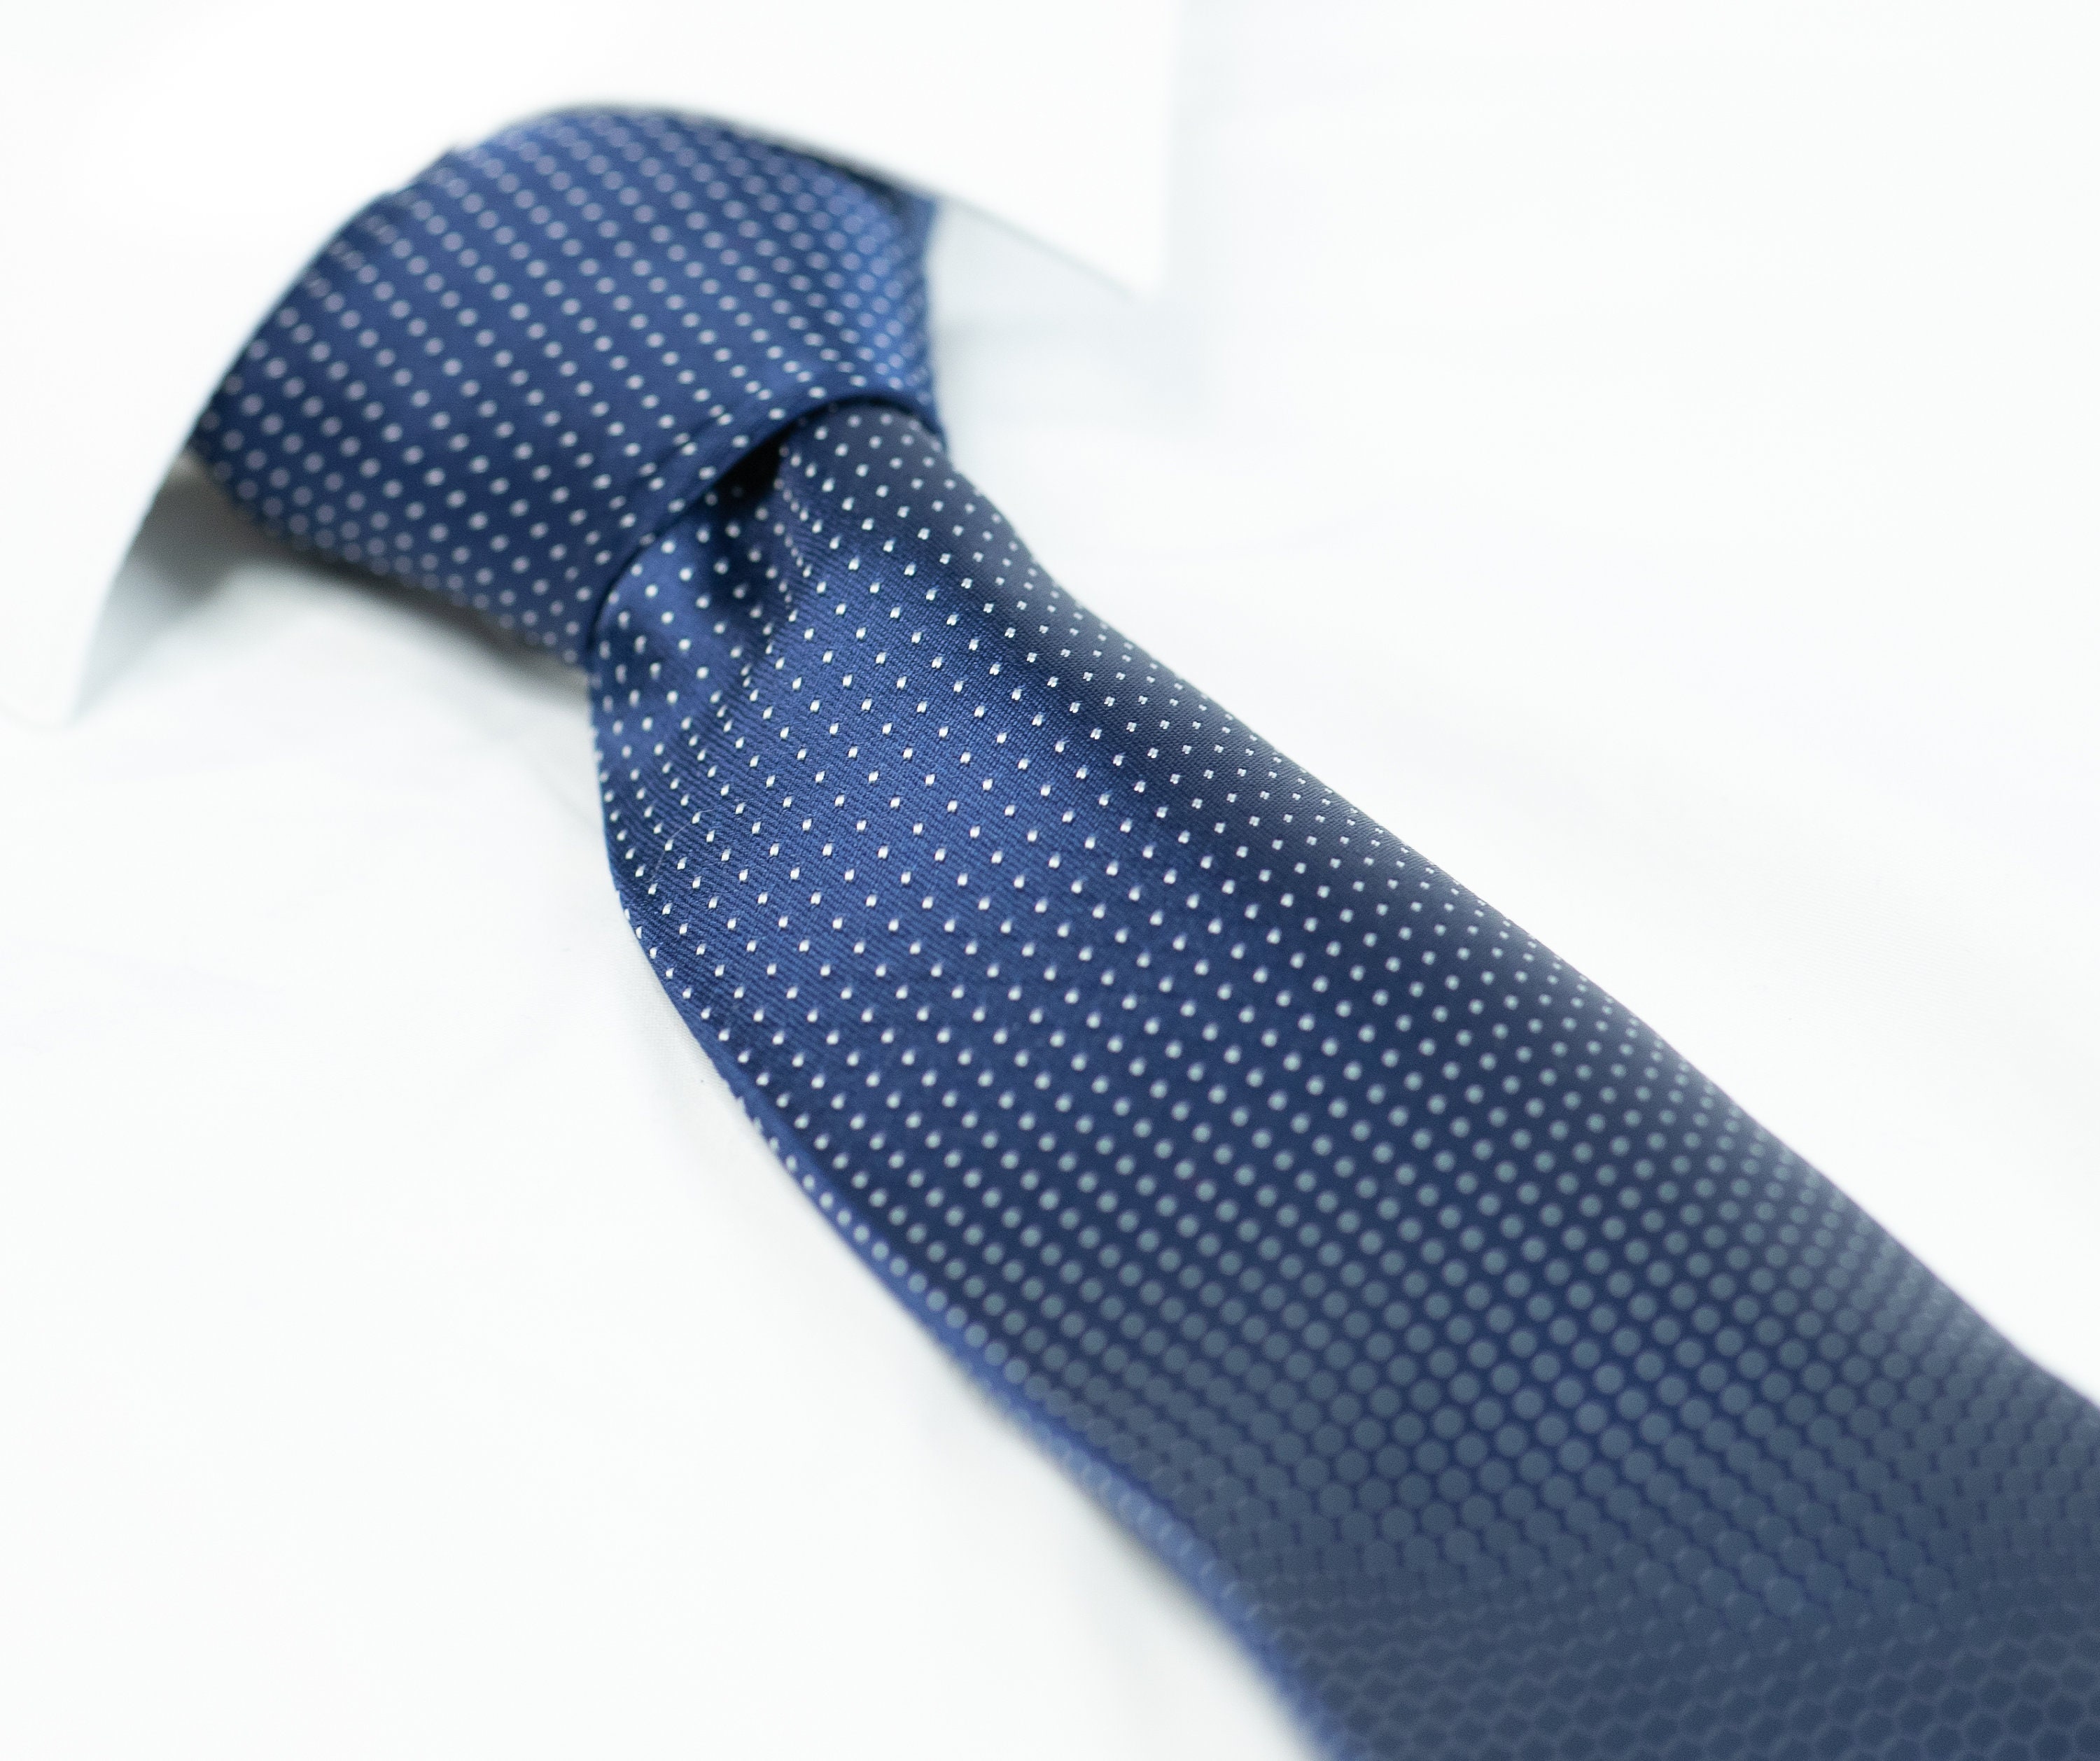 royal-blue-suit-pindot-tie-light-brown-belt-business-outfit-idea-men-spring-summer-3